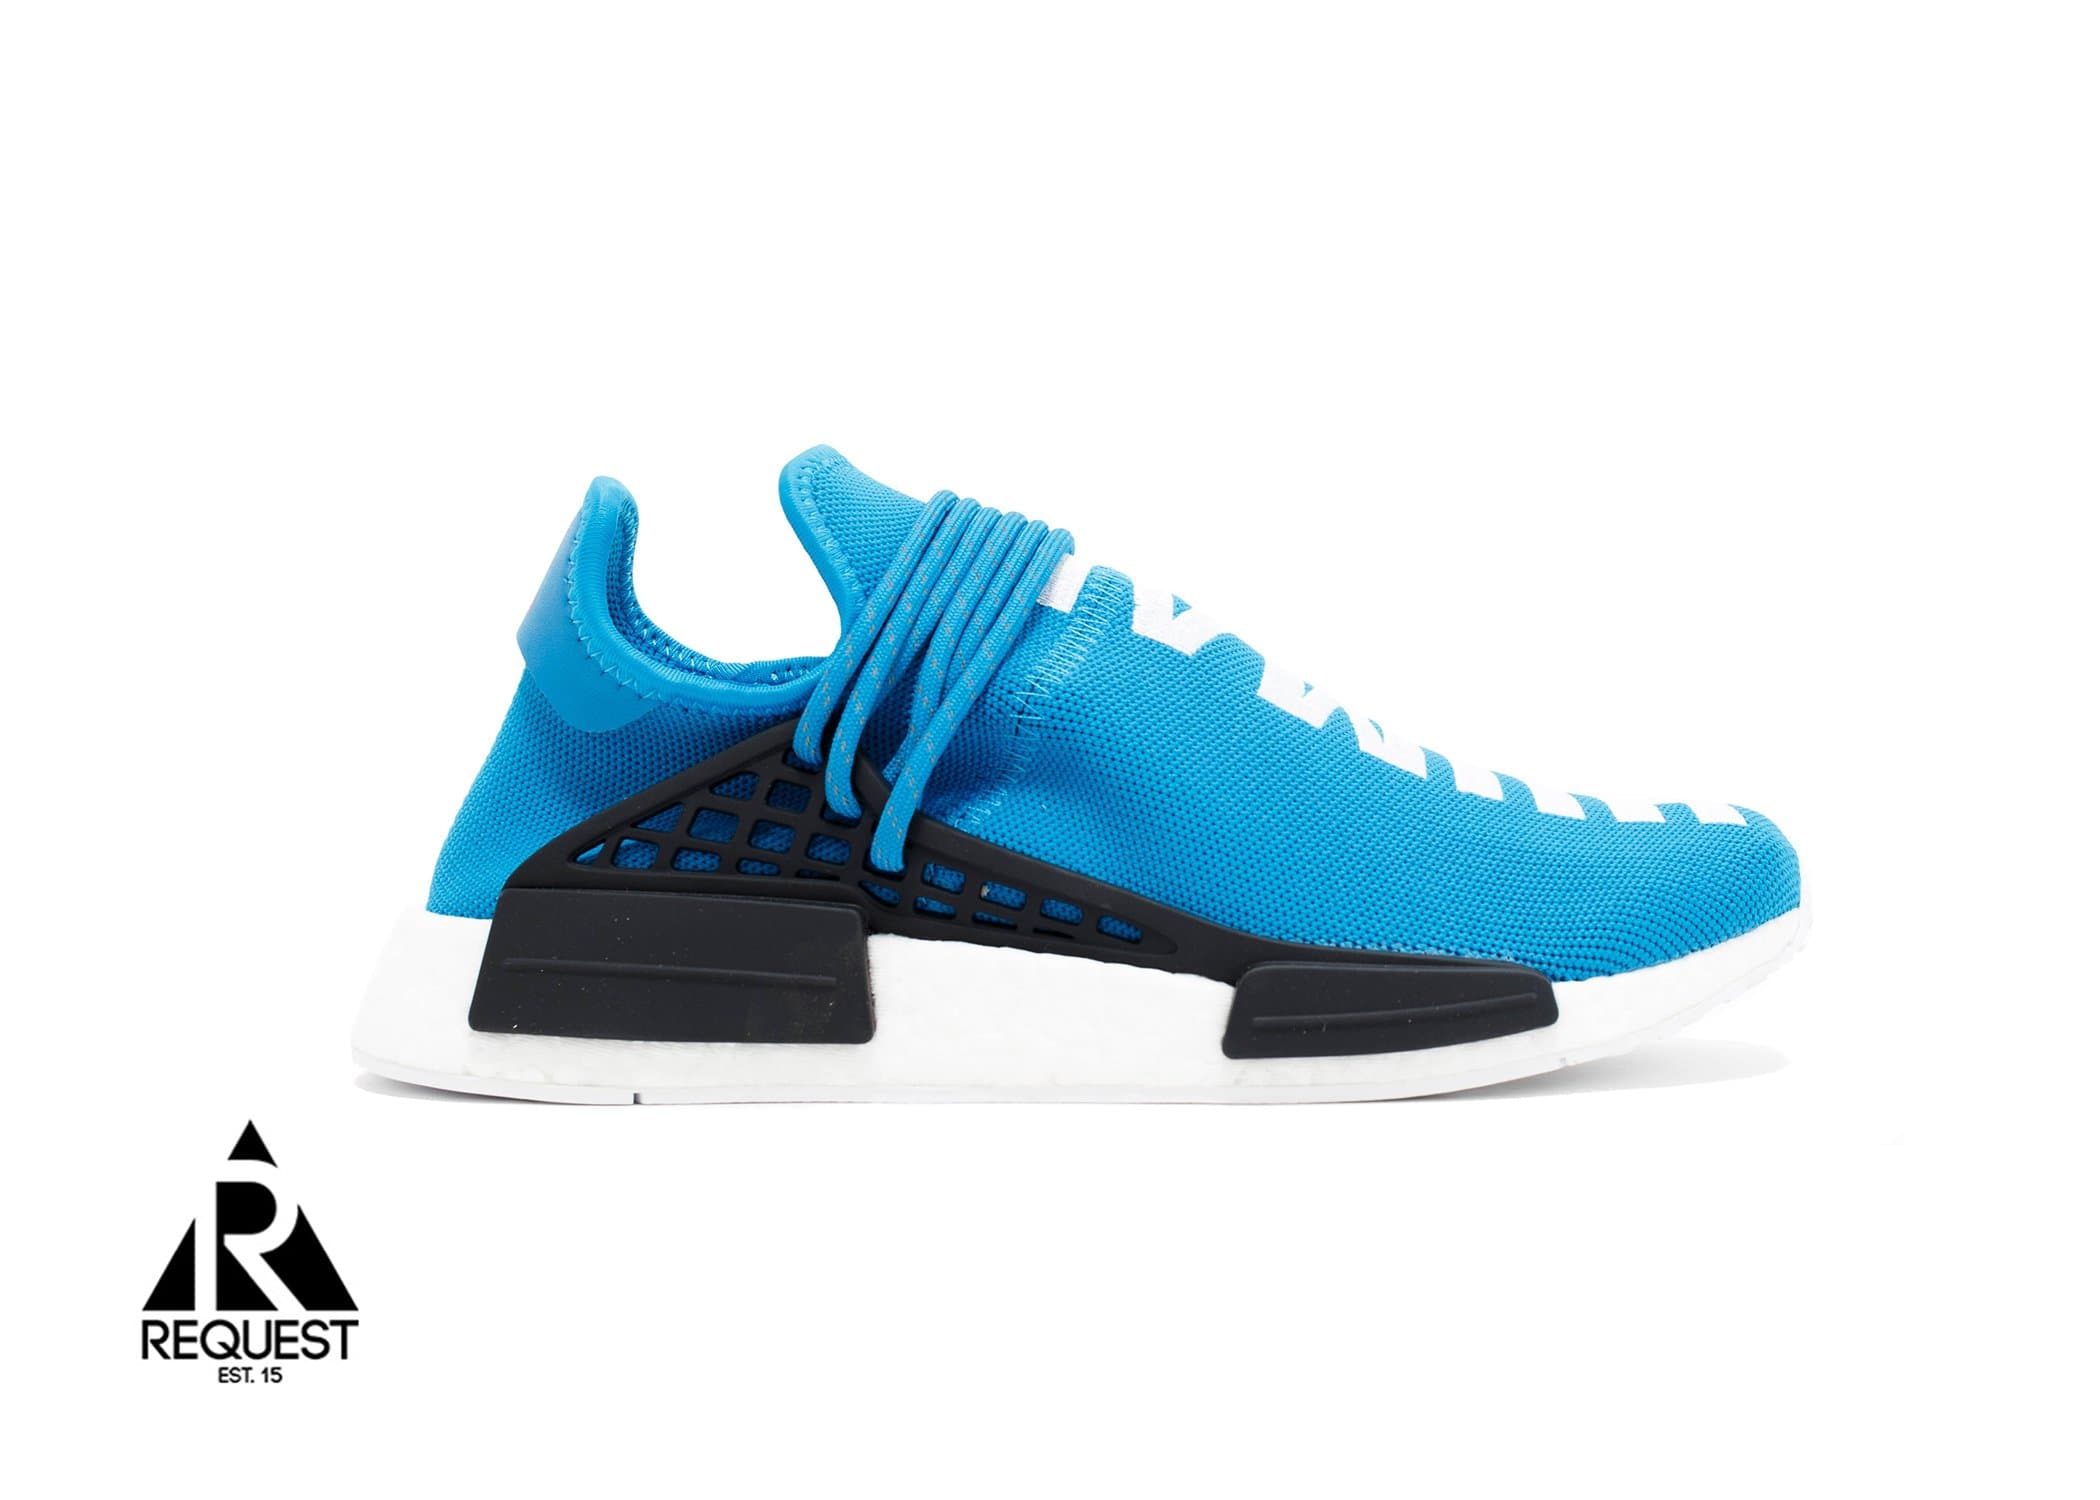 Adidas Human Race NMD “Blue”